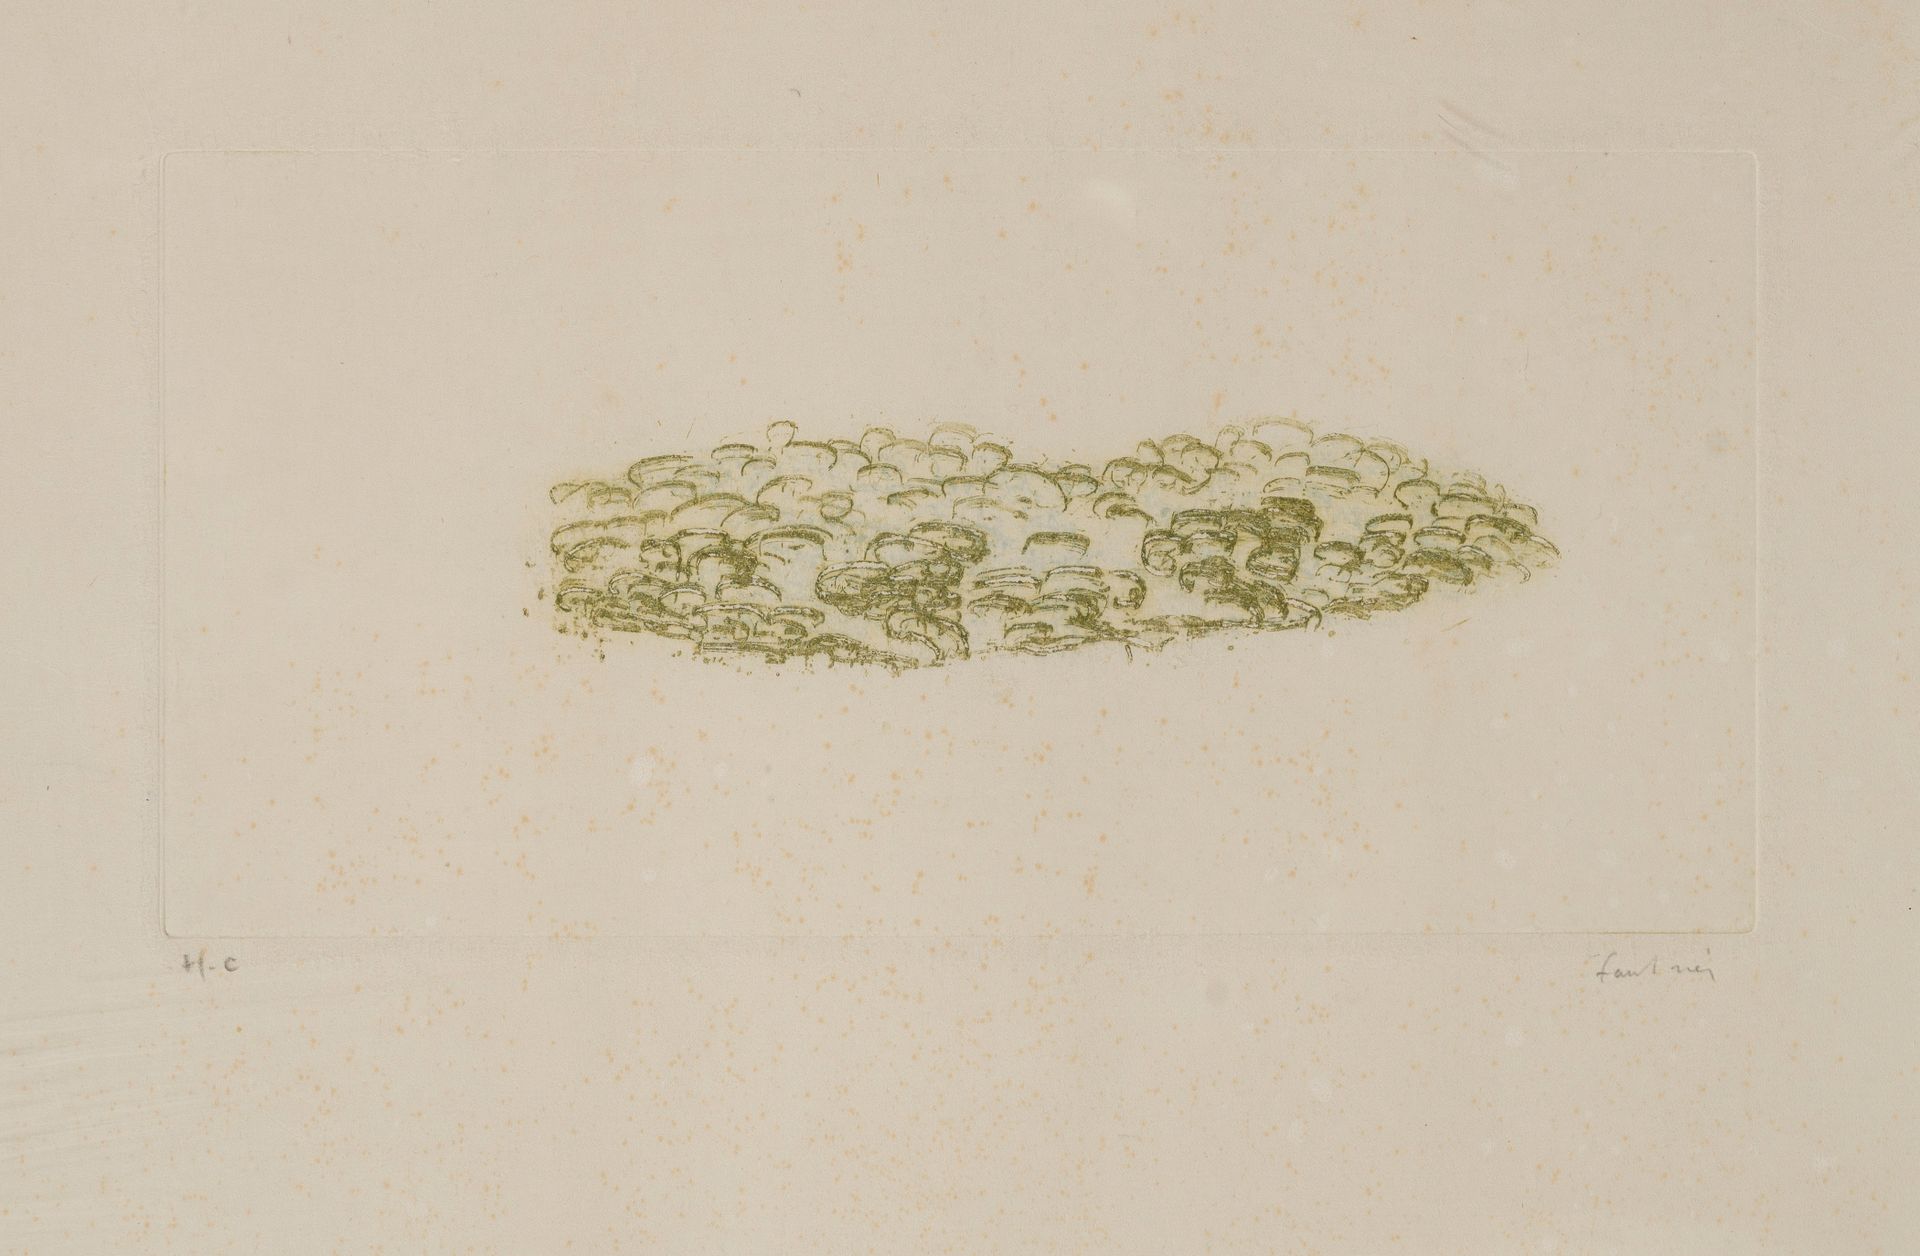 Null 让-福里埃 (1898-1964)

绿色的树木

彩色印刷品右下方有签名，左下方有编号HC。

27,5 x 41,5 正在观看

.